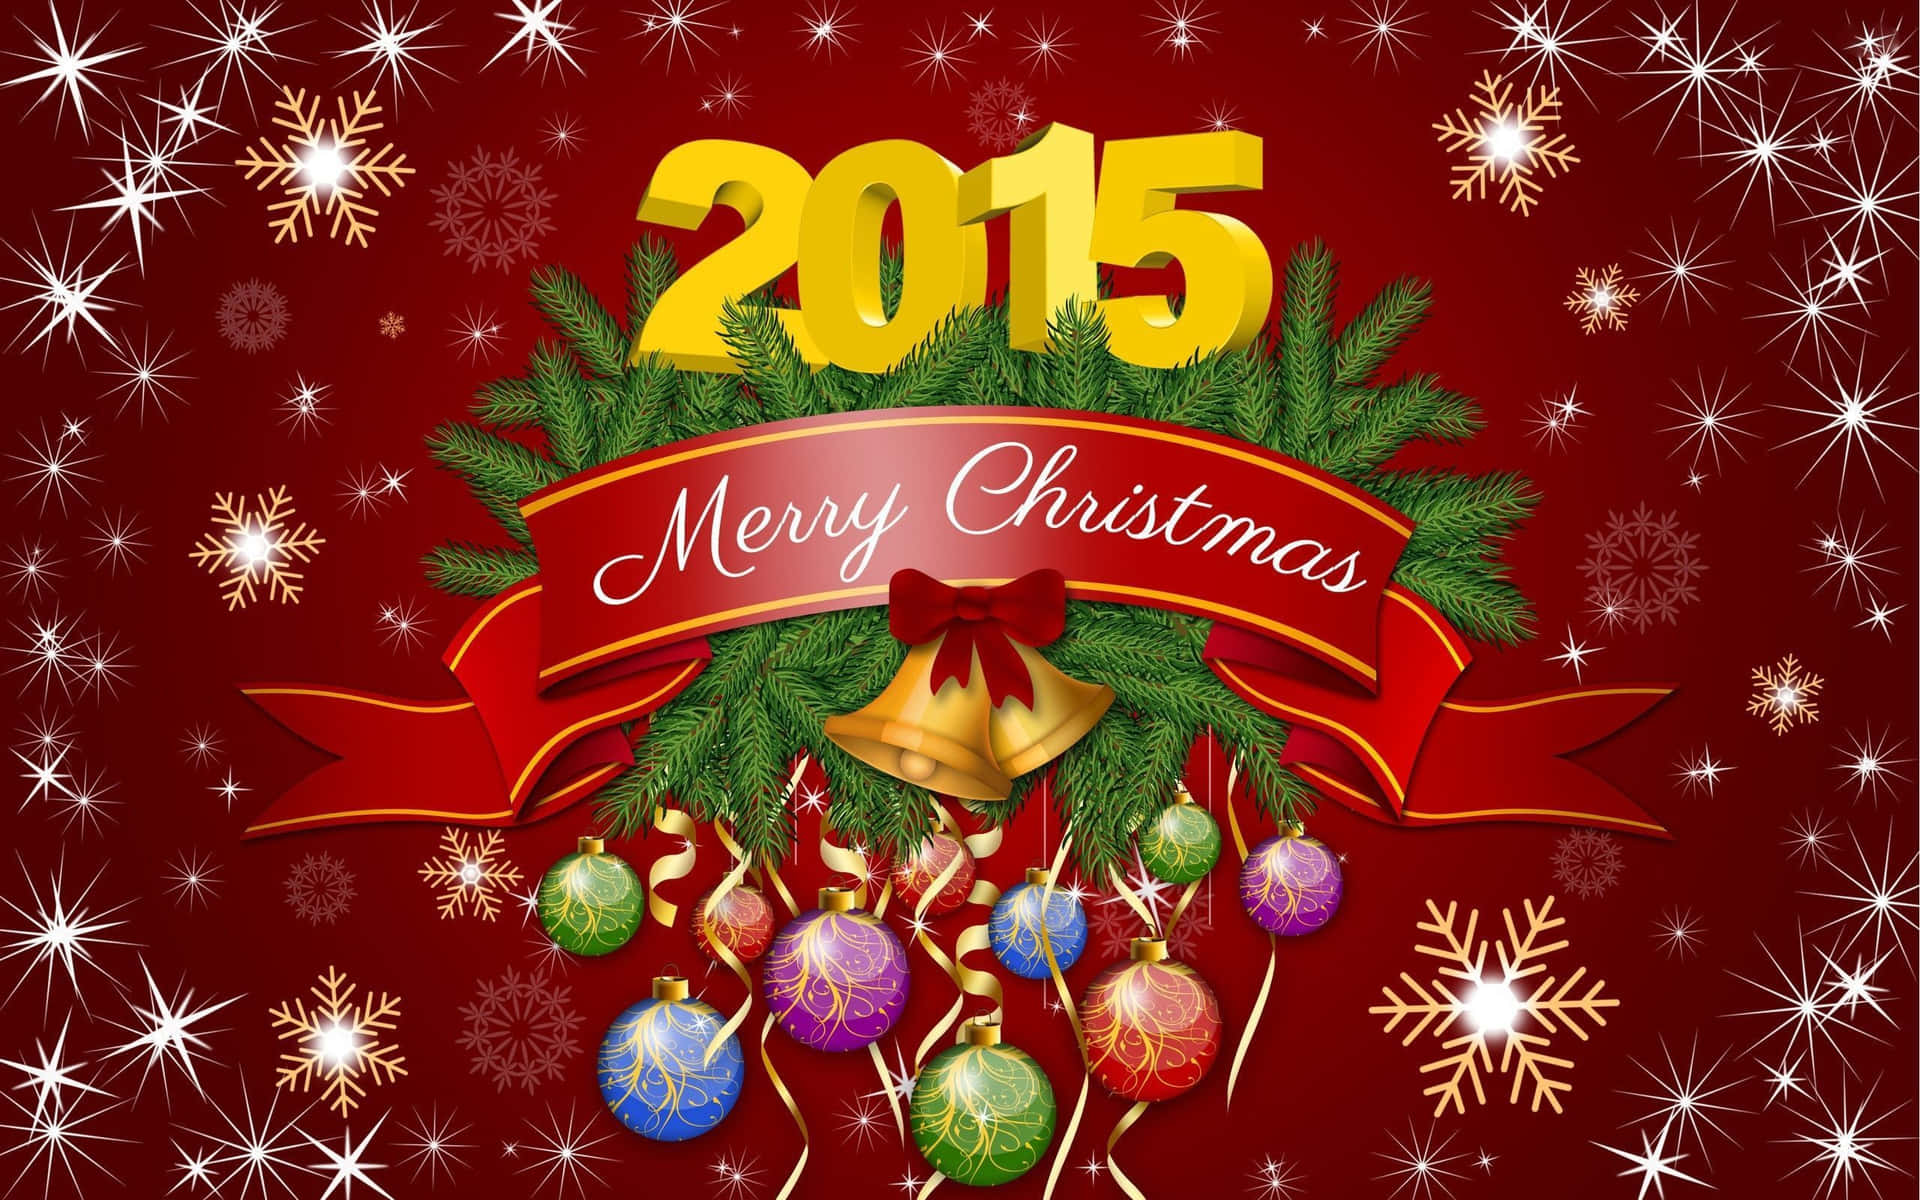 Merry Christmas 2015 Greeting Card Wallpaper